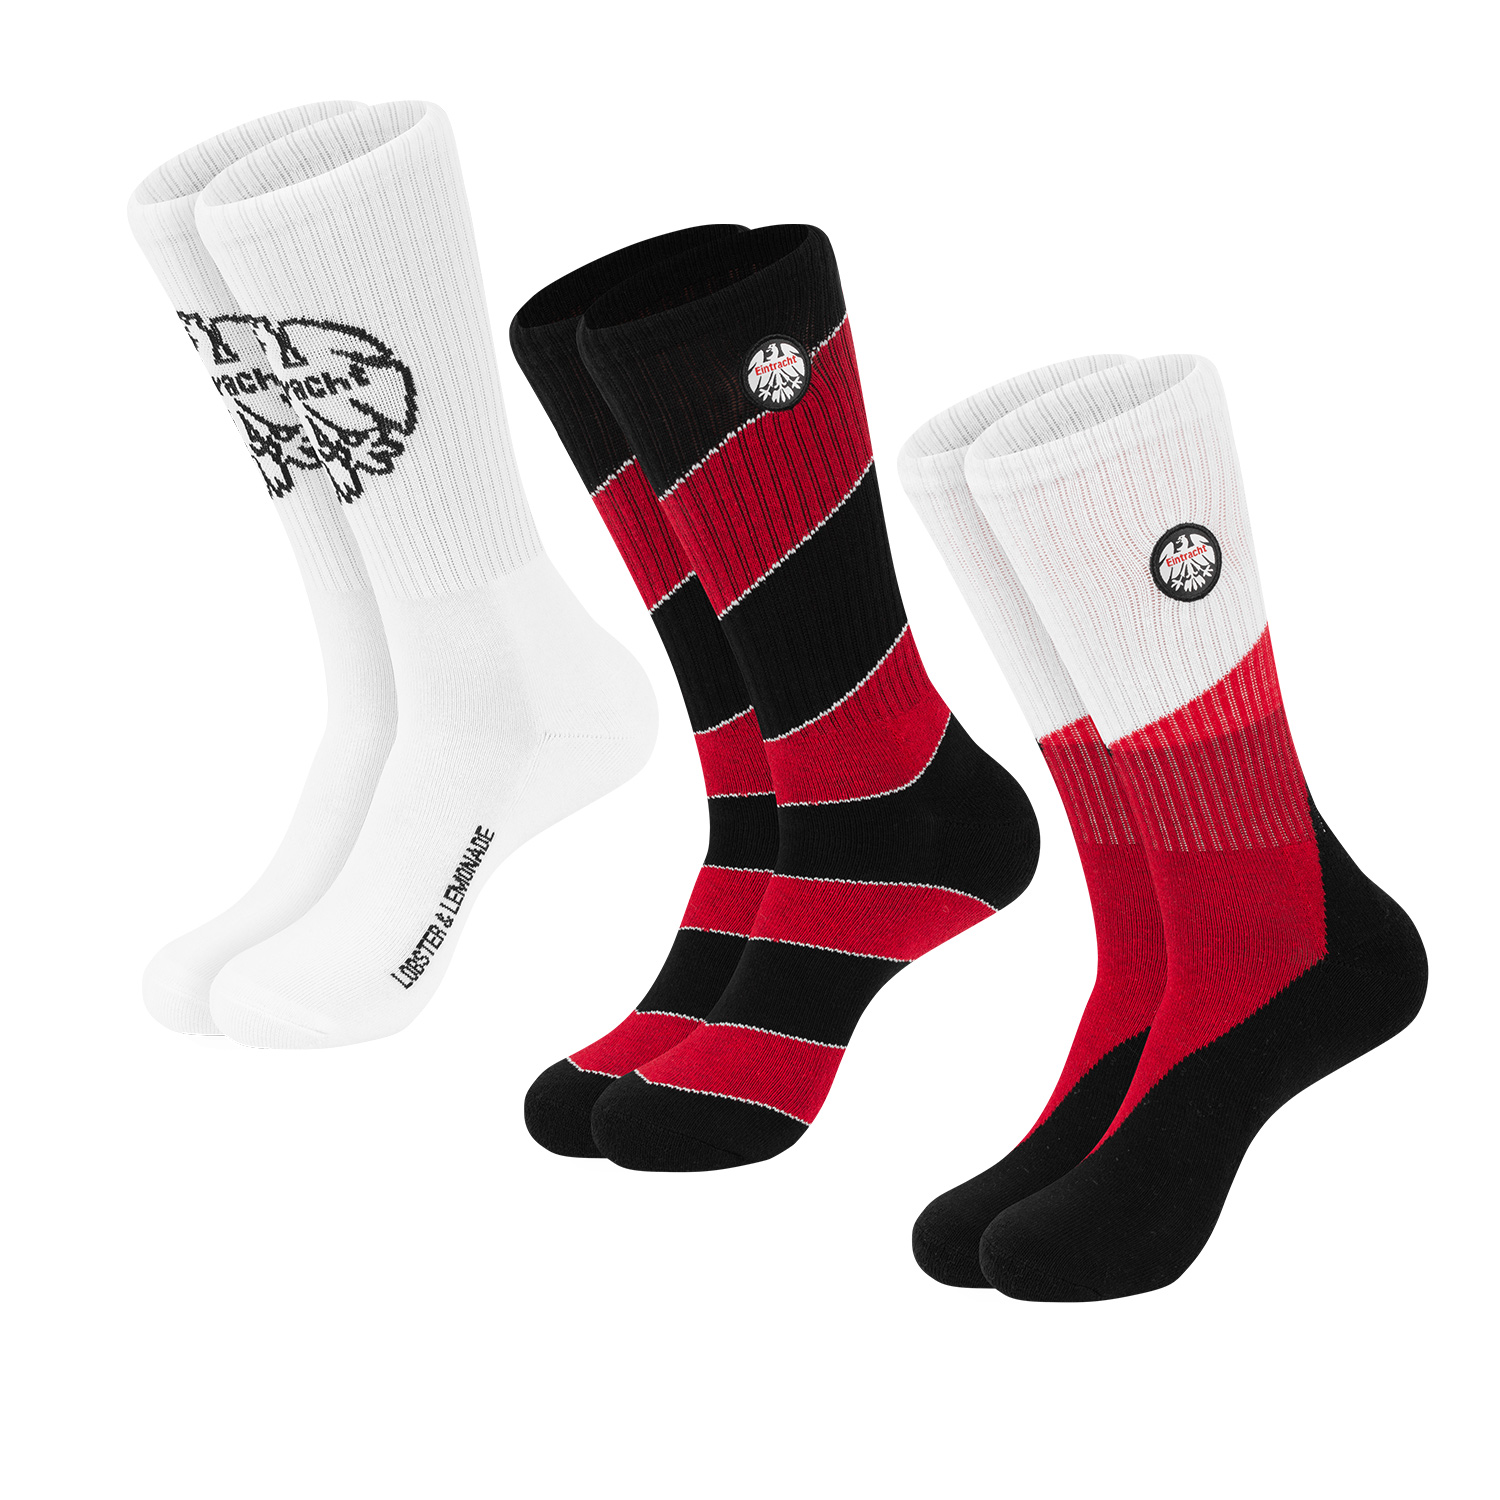 Bild 1: Retro Socks 3-Pack 